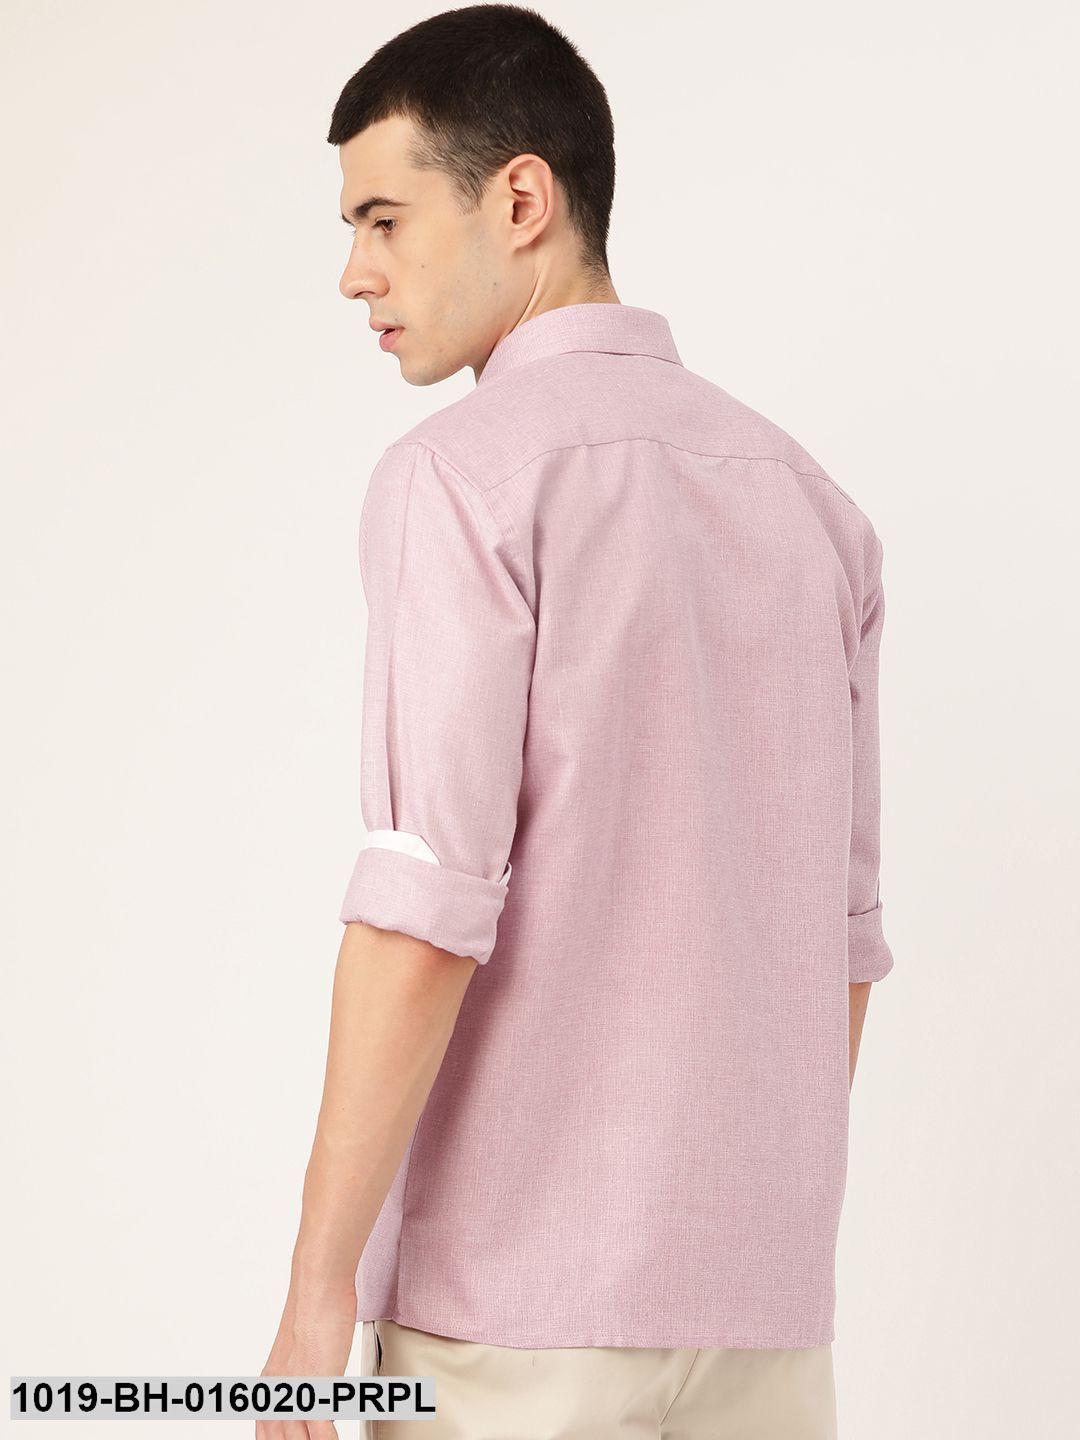 Men's Cotton Linen Light Purple Casual Shirt - Sojanya